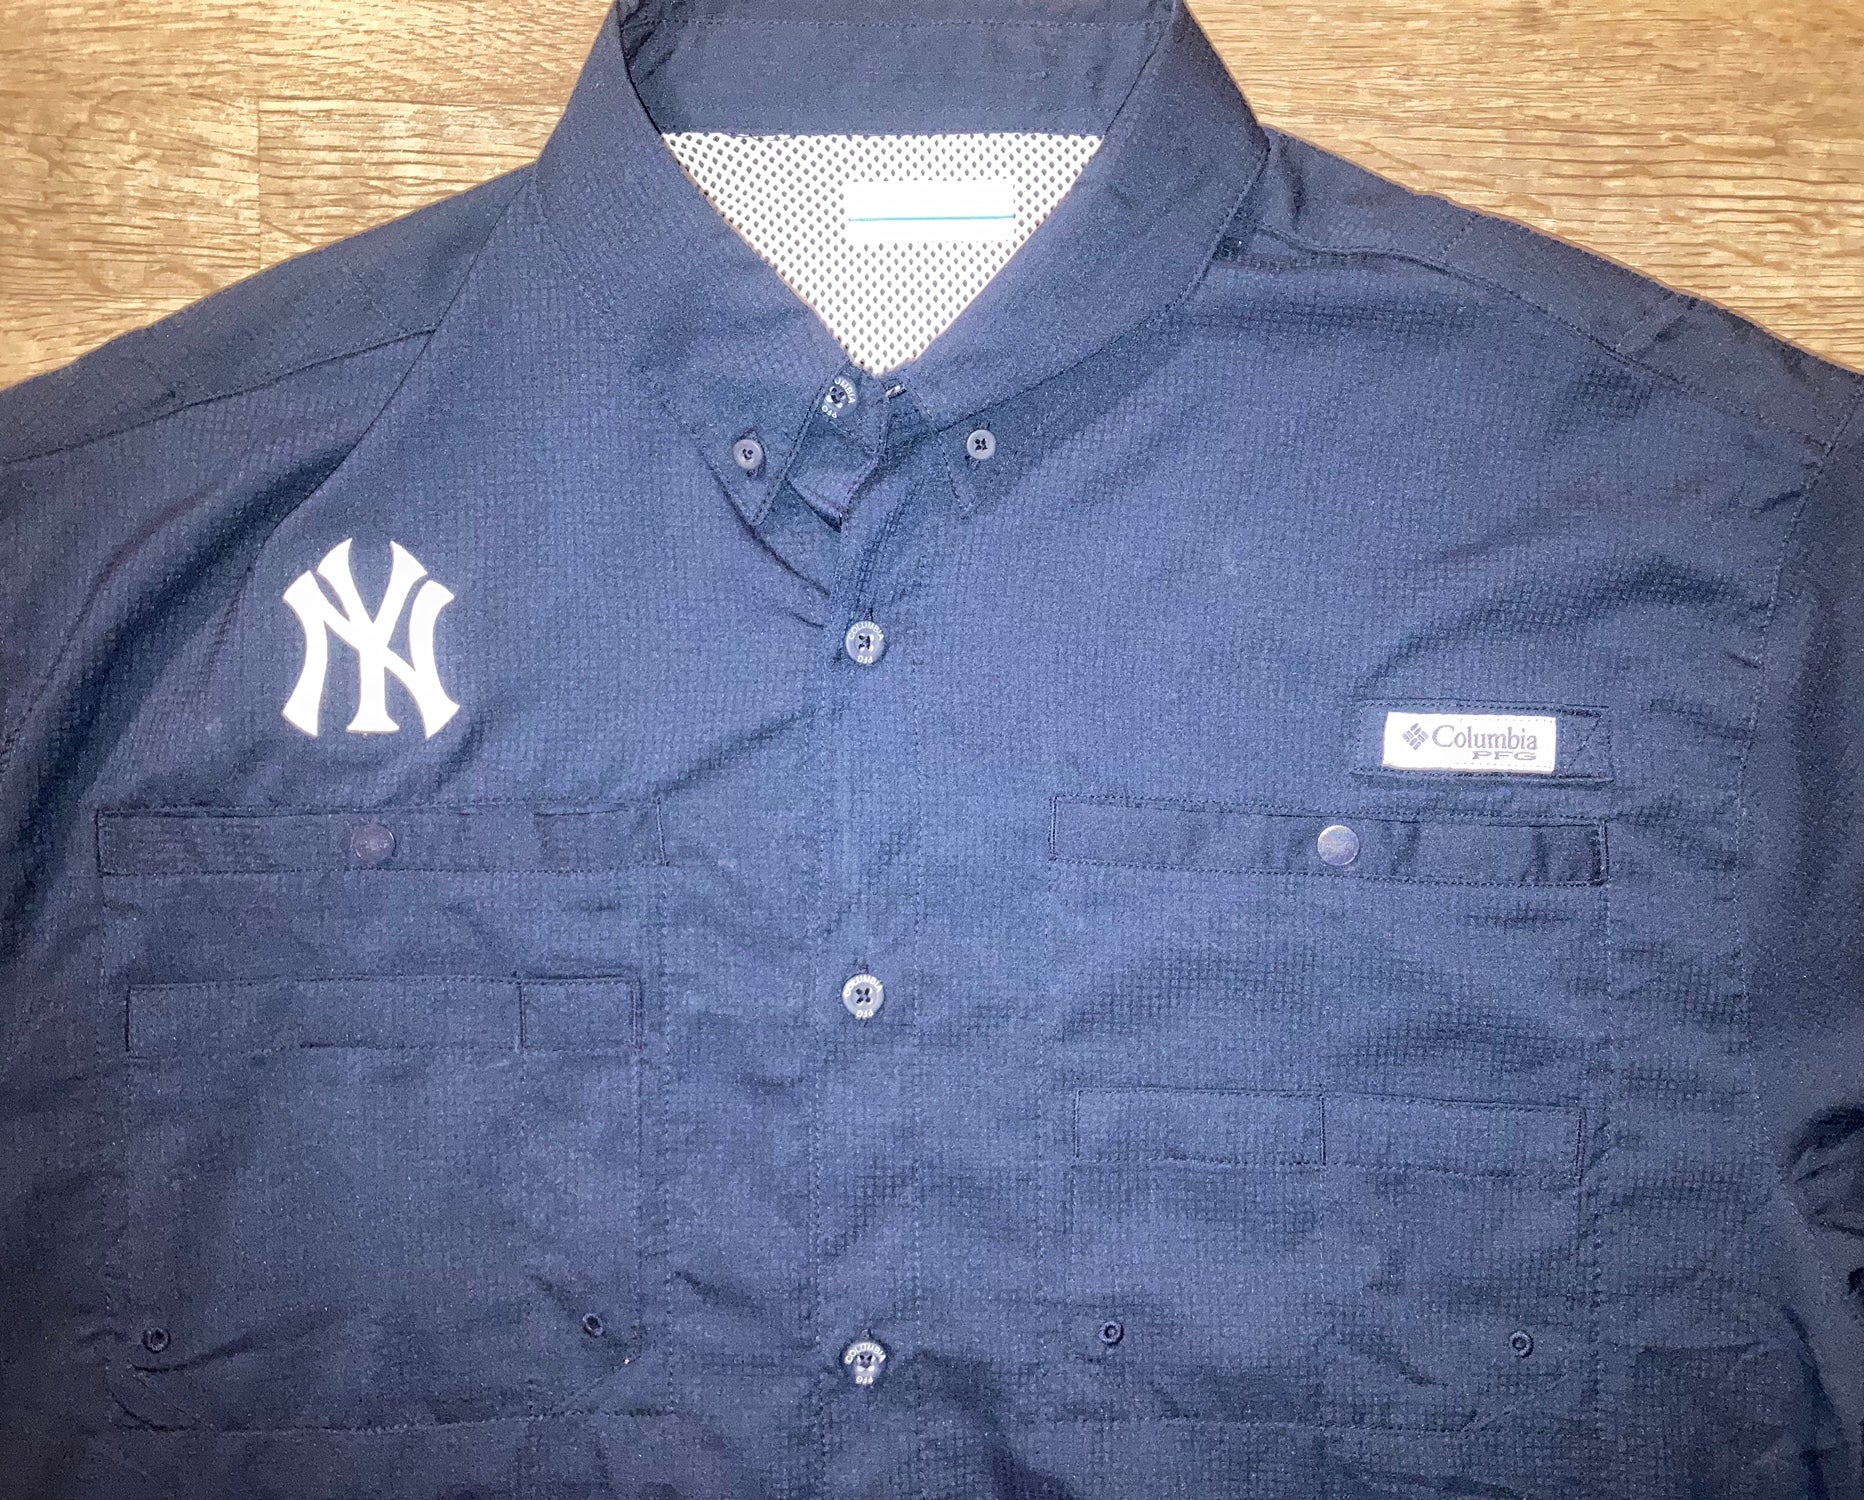 Large) Columbia PFG New York Yankees Shirt